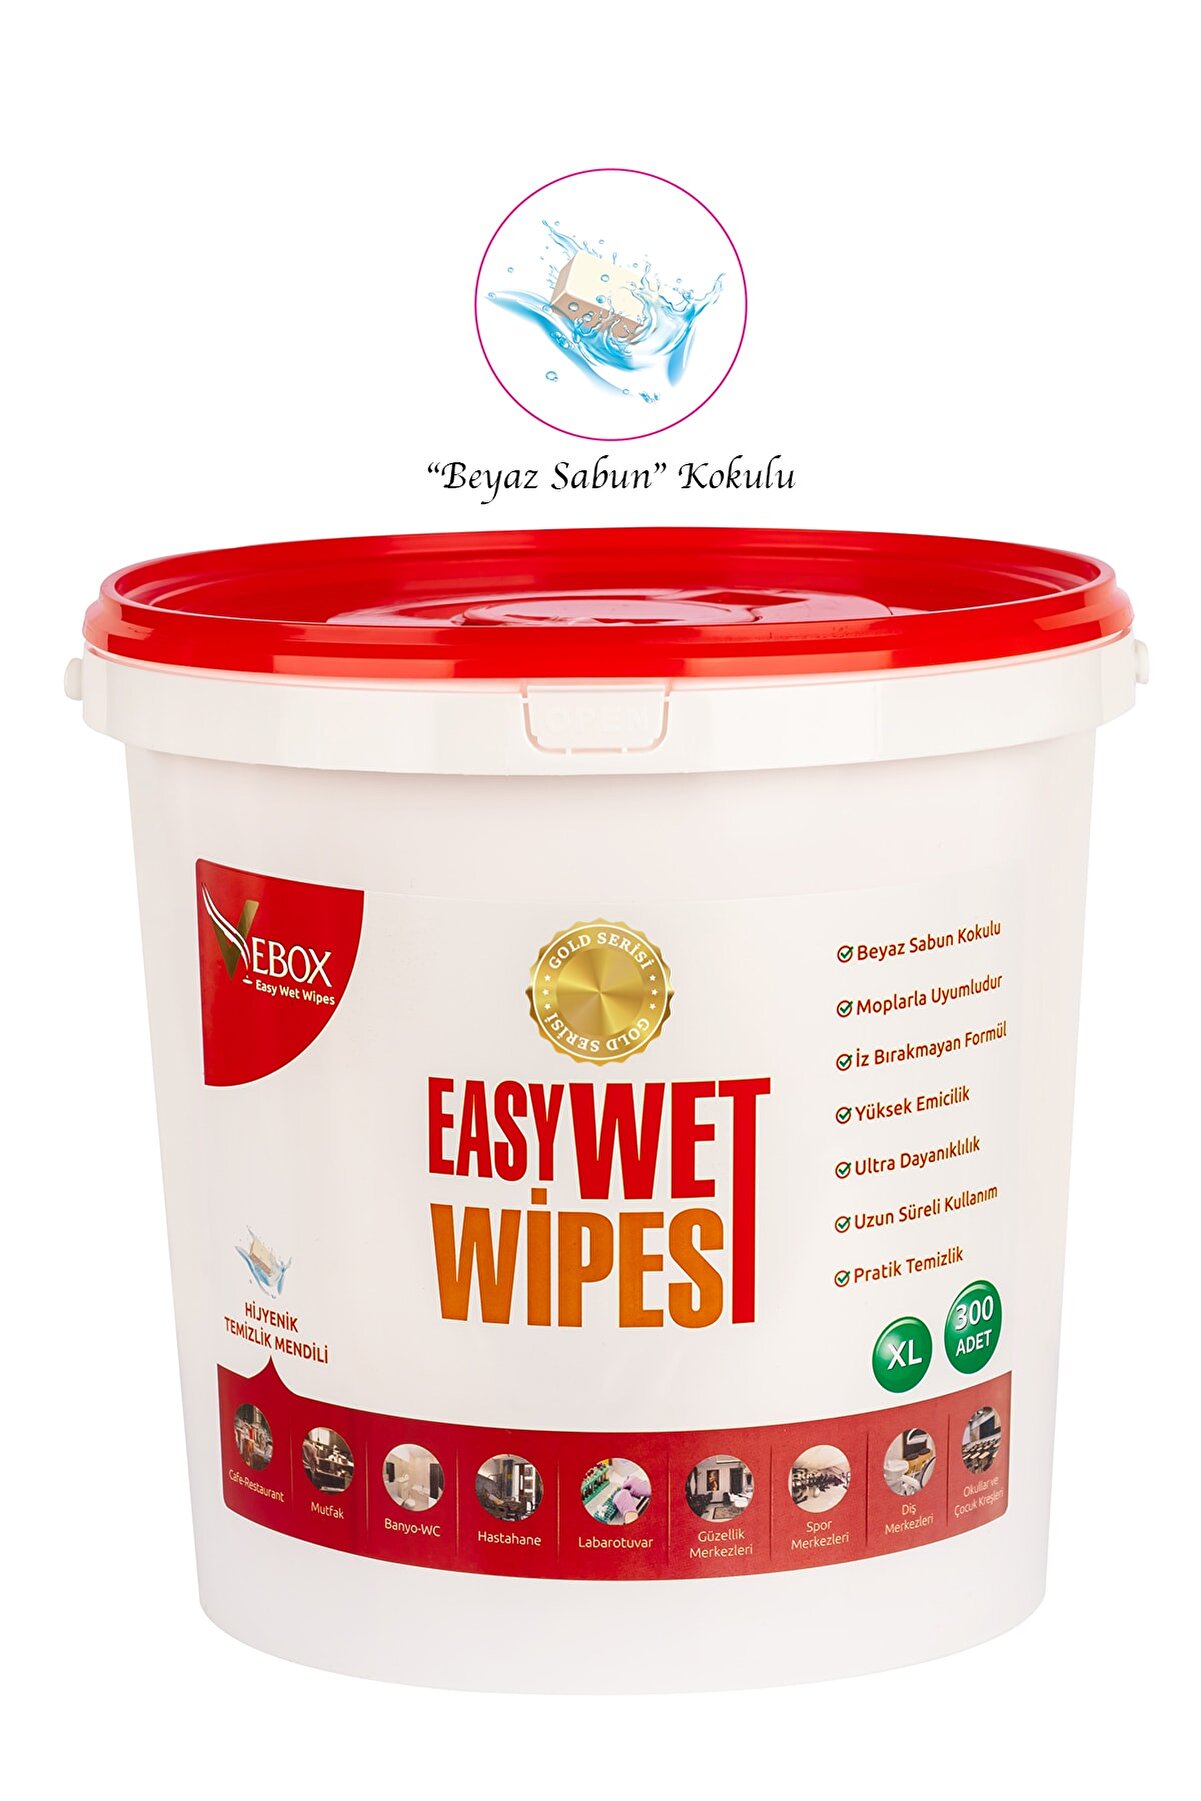 Vebox Easy Wet Wipes Islak Kova Mendil Beyaz Sabun Kokulu Gold 300 Adet